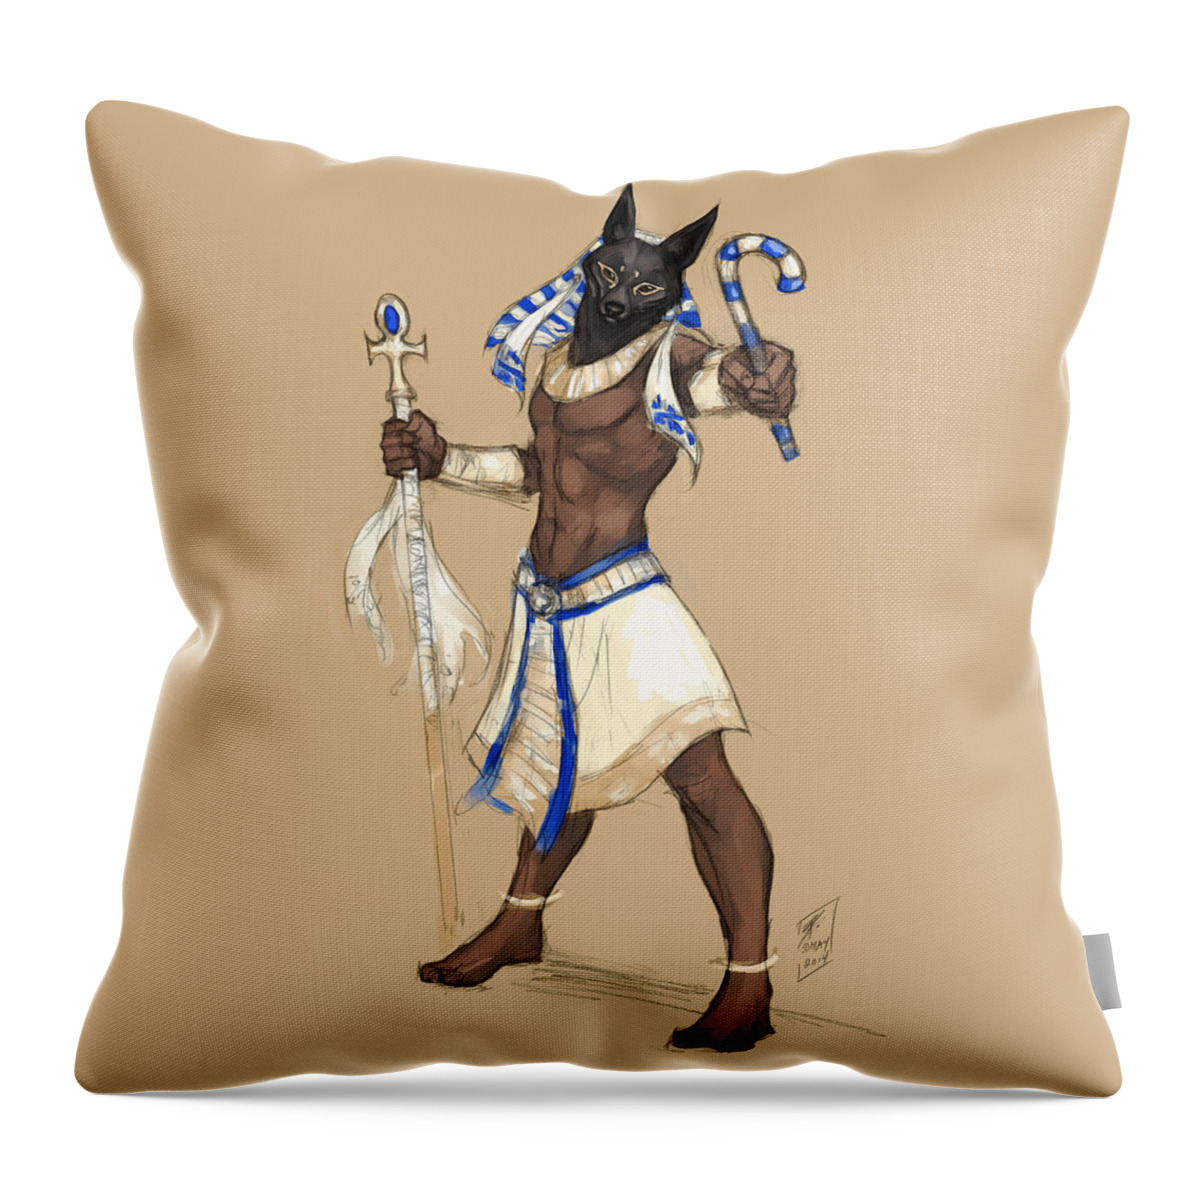 Anubis Throw Pillow featuring the digital art Anubis by Brandy Woods